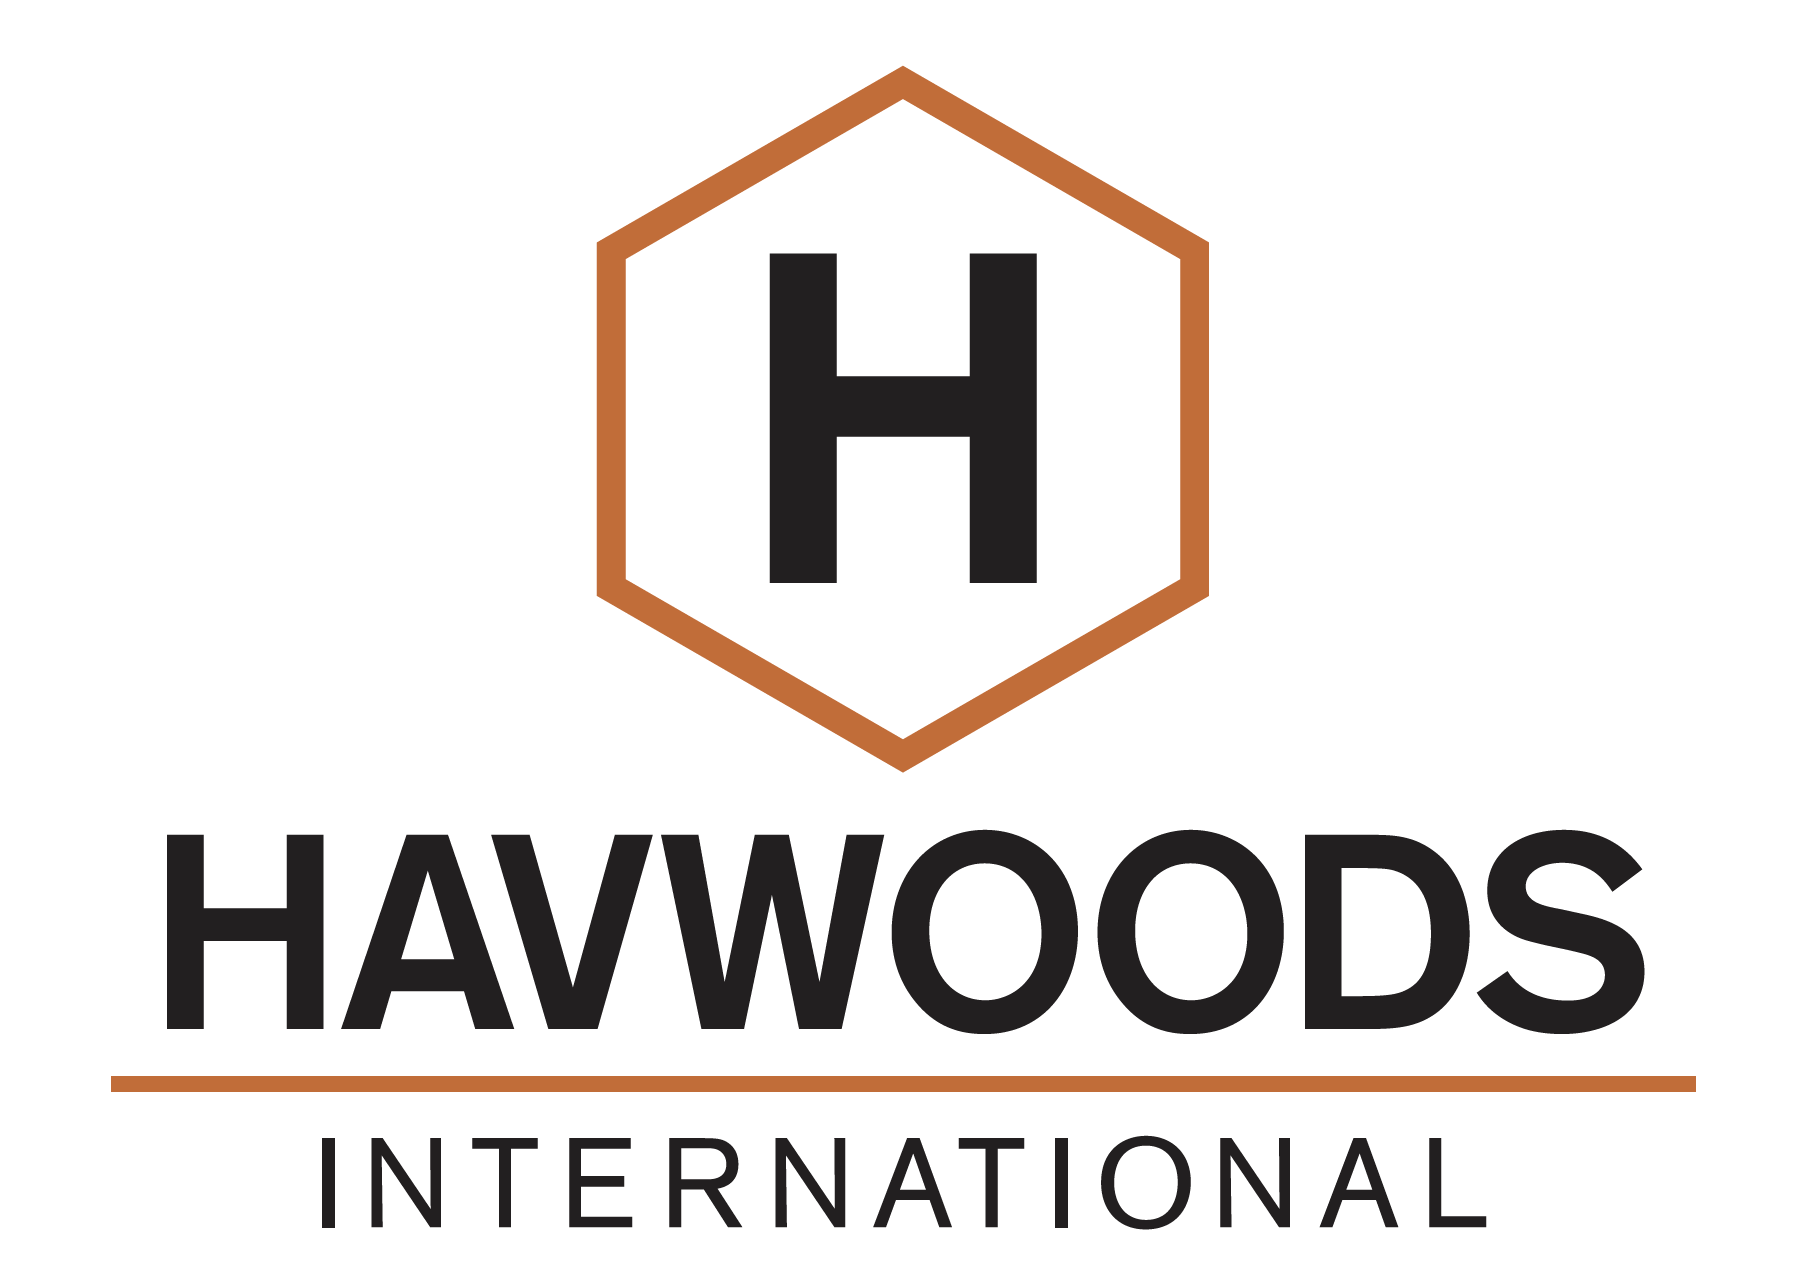 Havwoods International